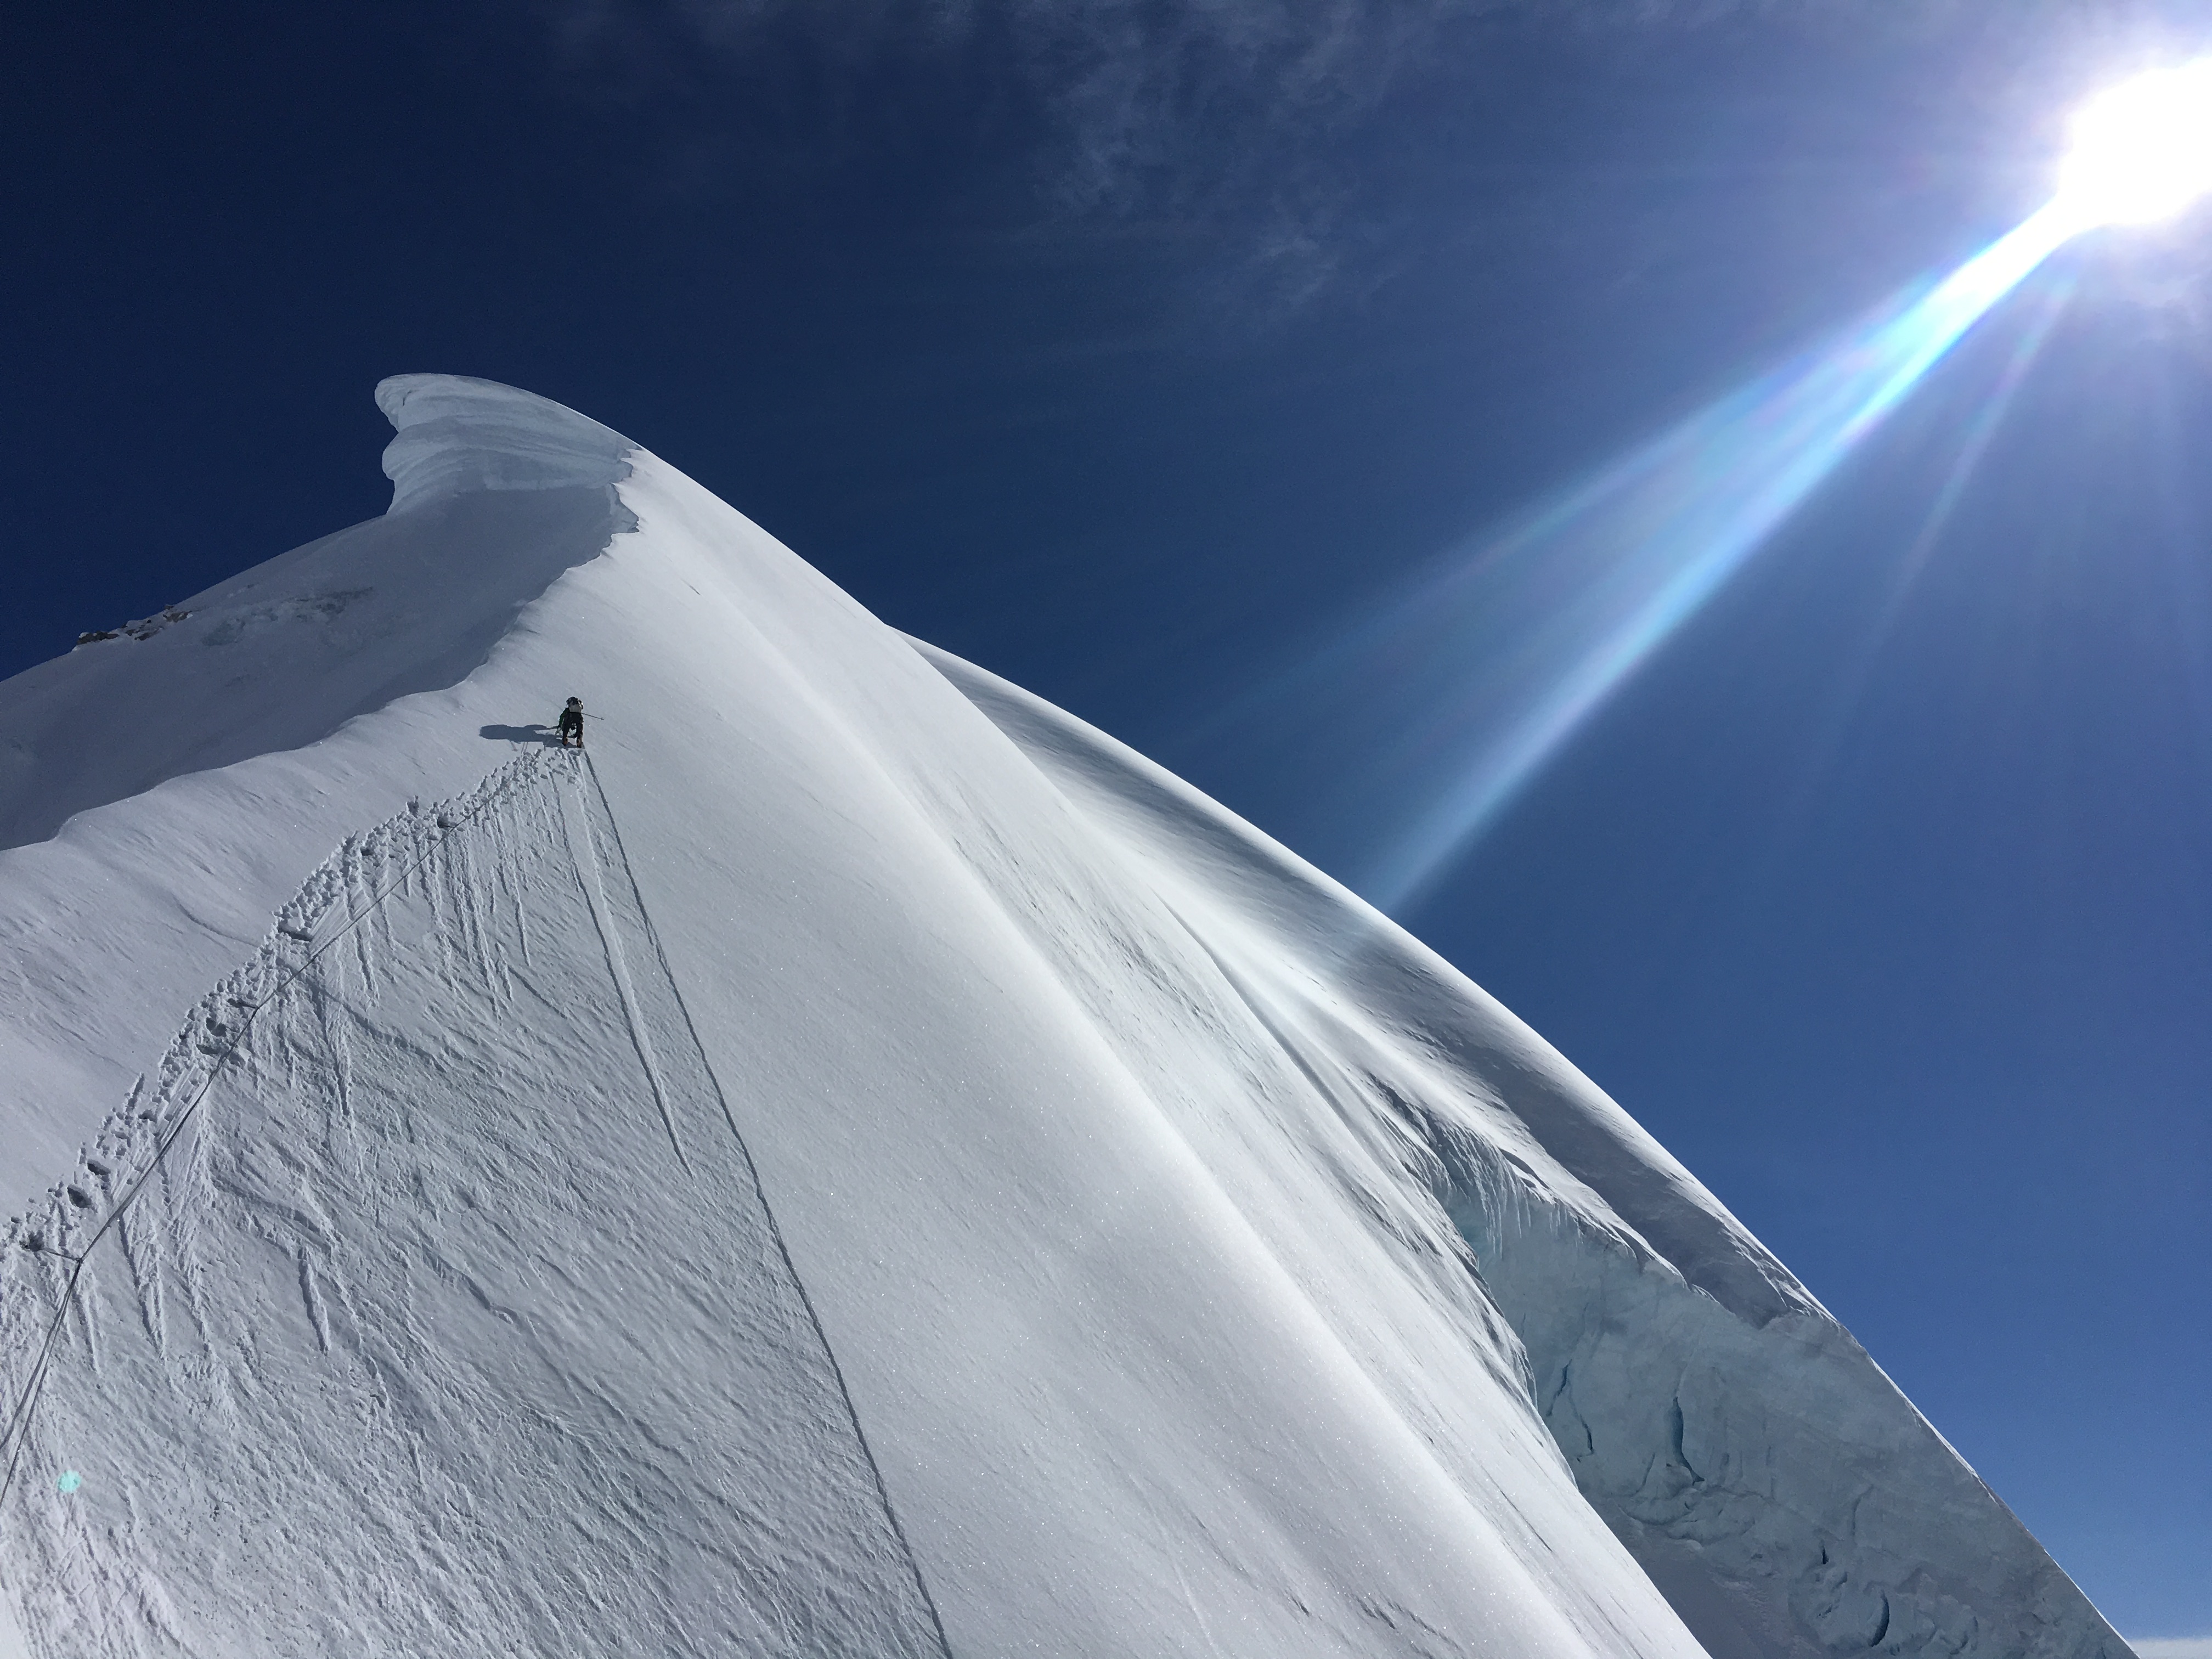 Climber ascends a steep, snowy ridge